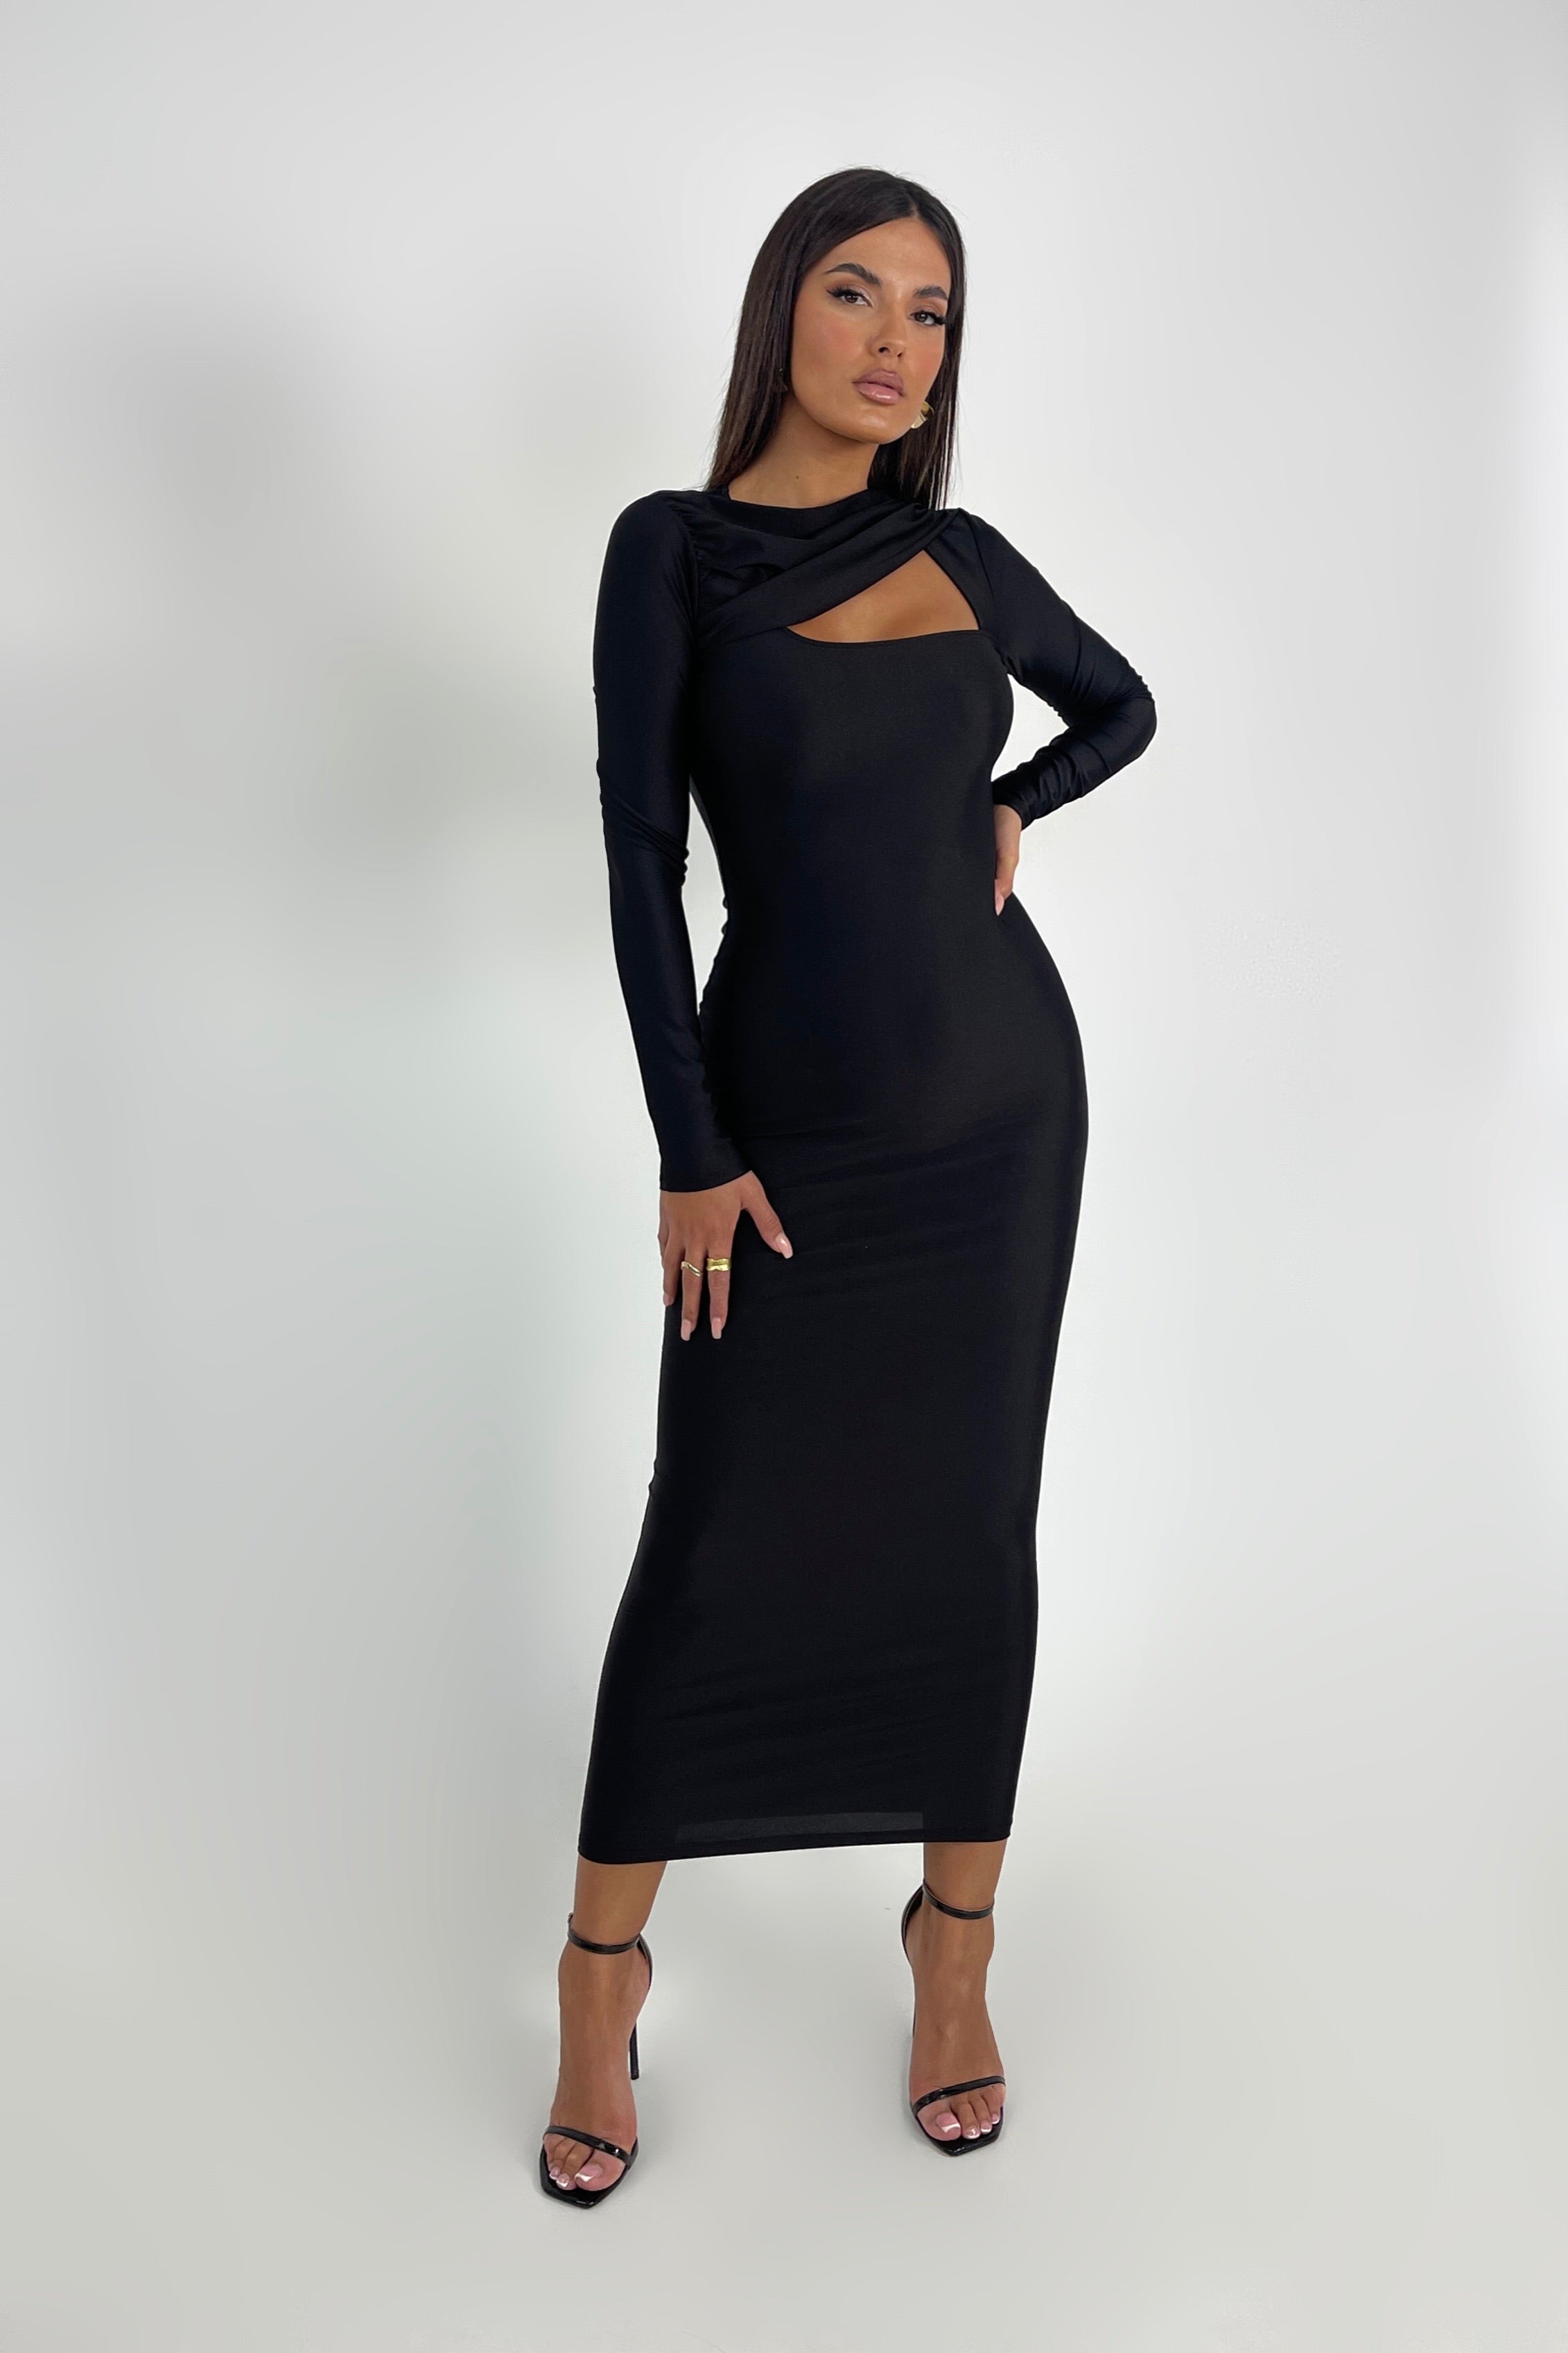 Solana Black Dress